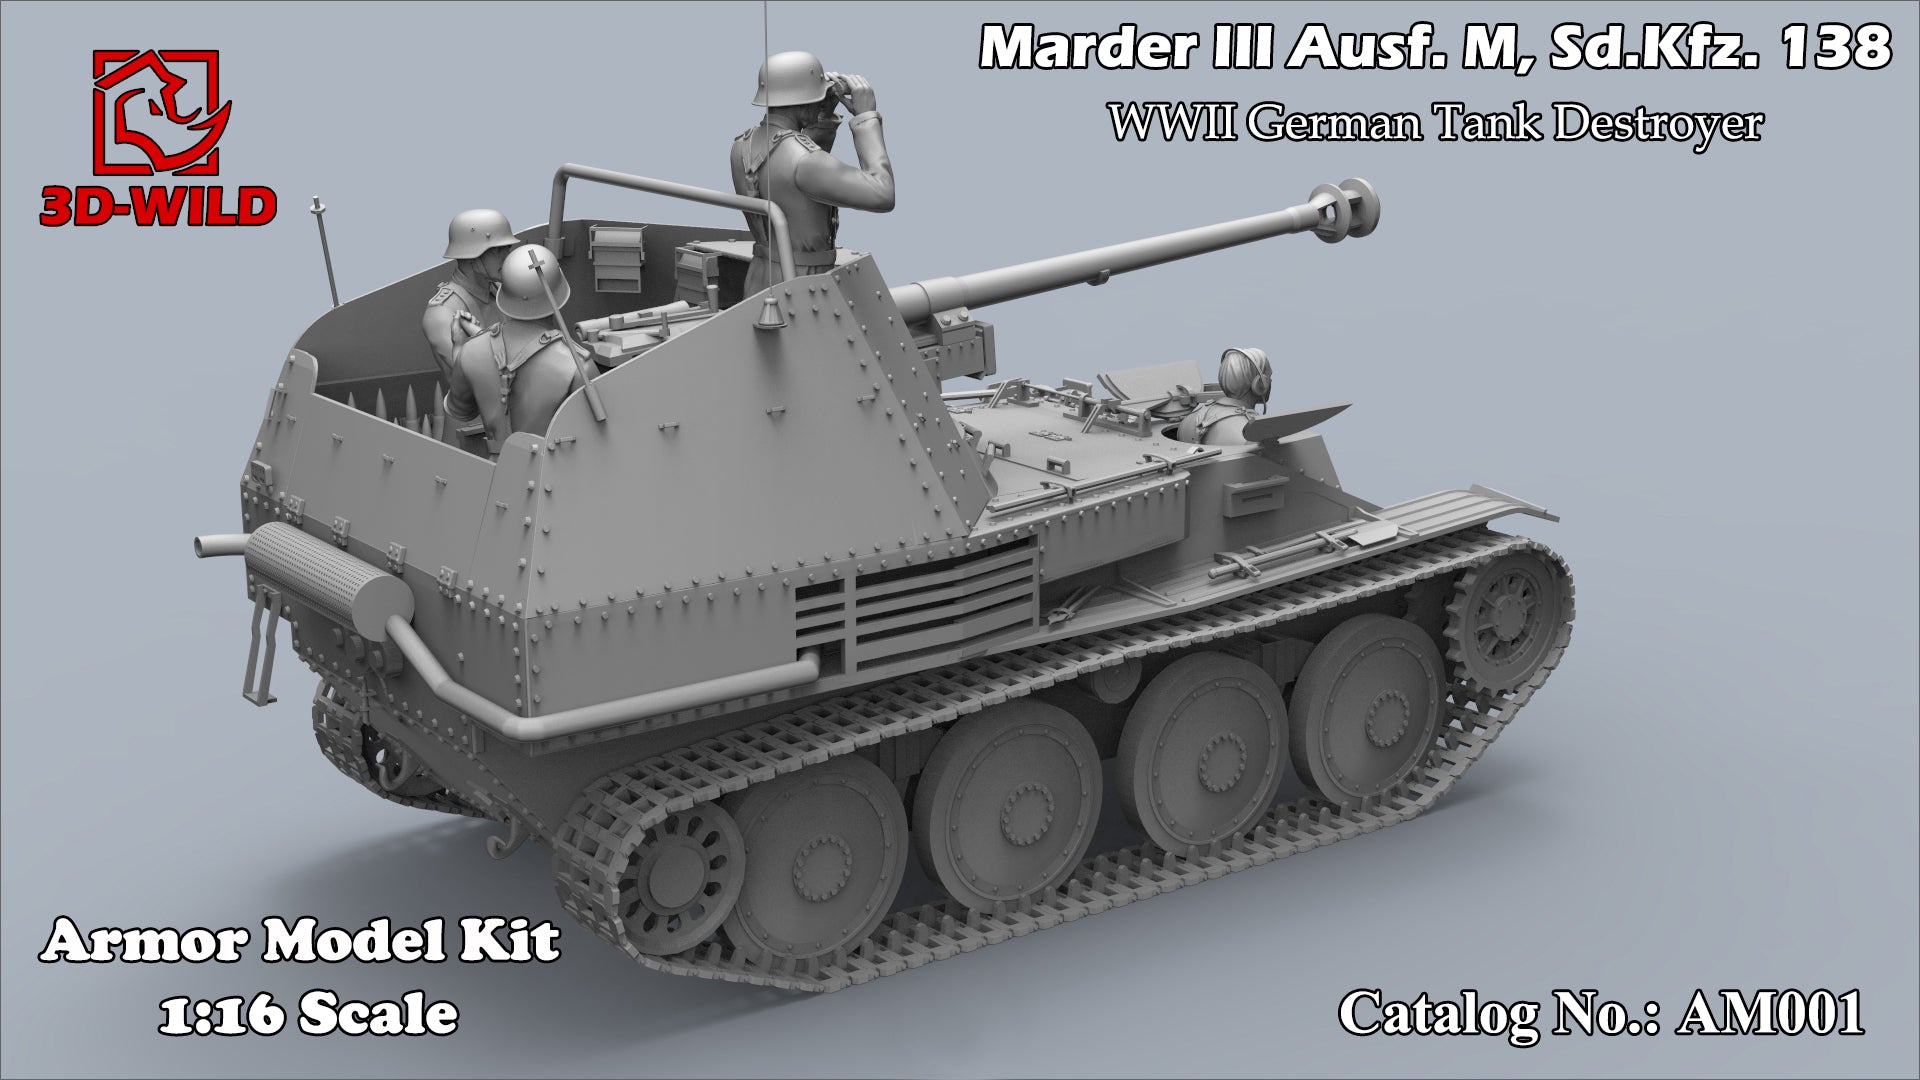 The Marder III Tank Destroyer 